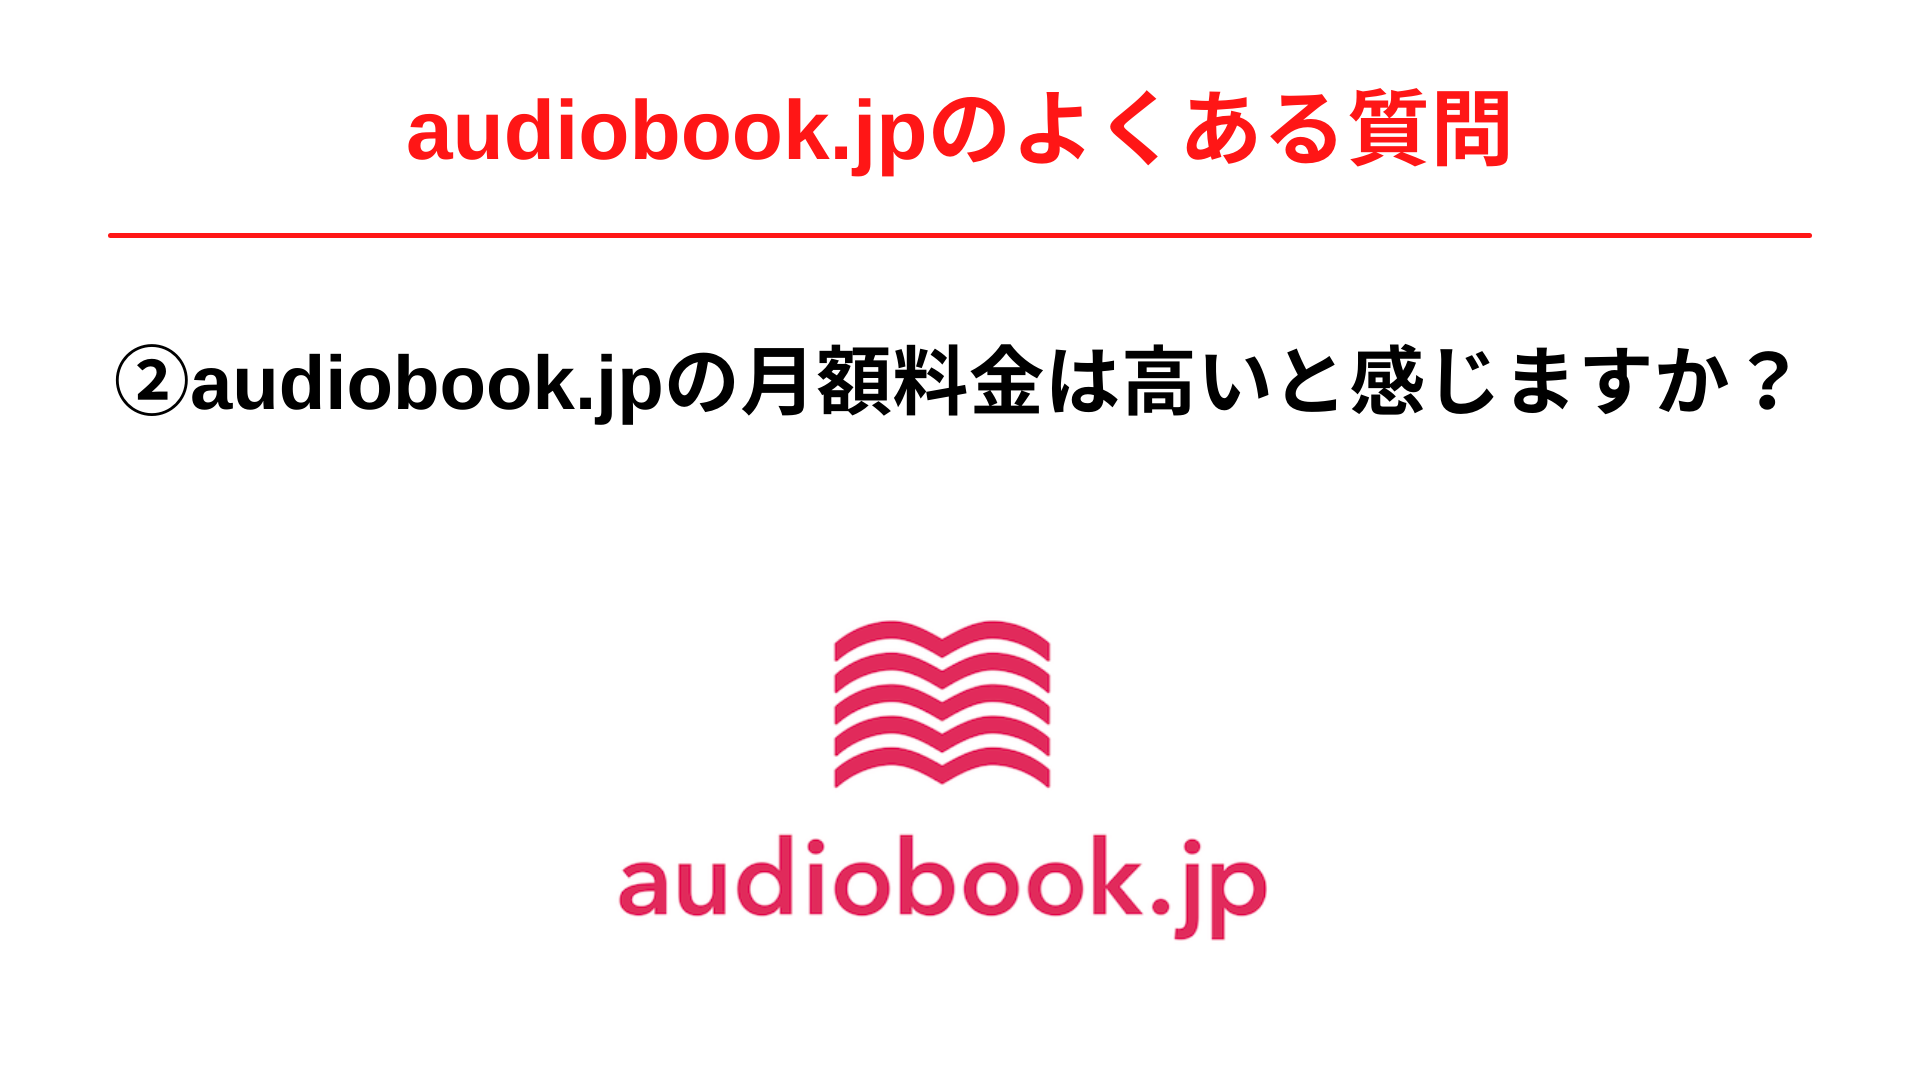 audiobook.jpの月額料金は高いと感じますか？